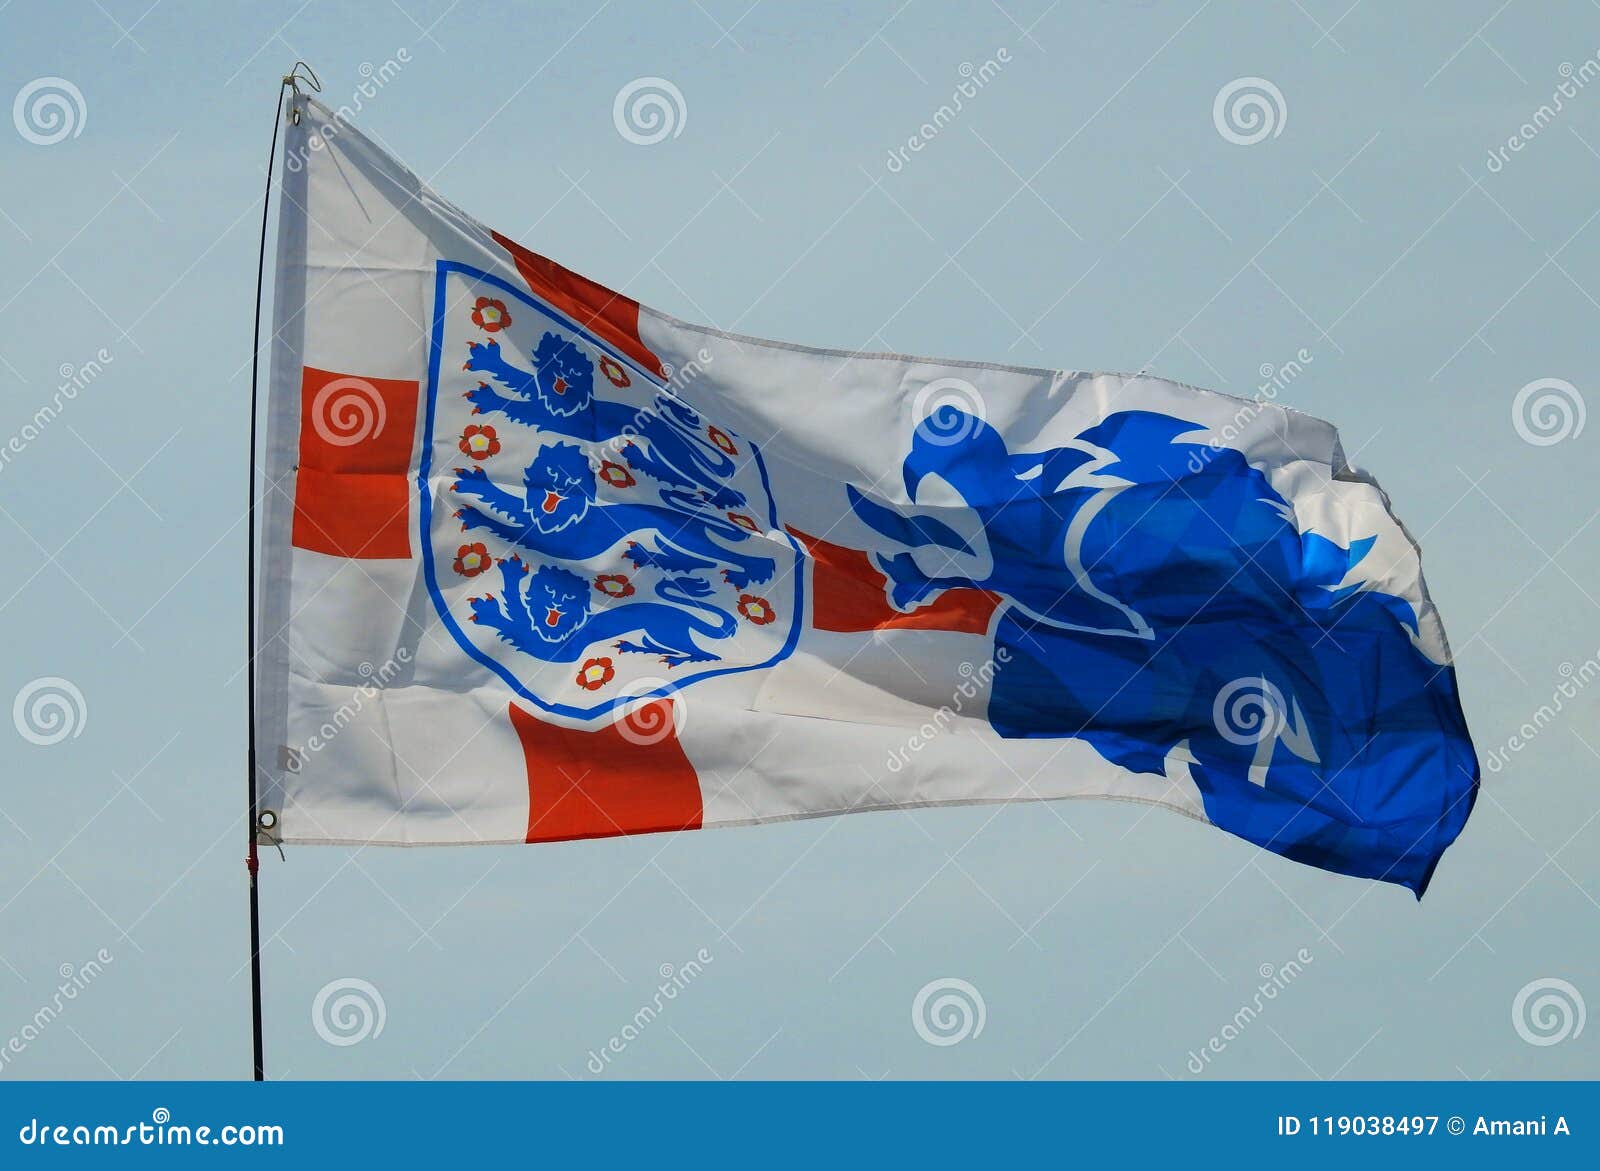 Official ENGLAND FA CREST 3 LIONS WINDOW STICKER CAR BEDROOM FLAG FOOTBALL GB 